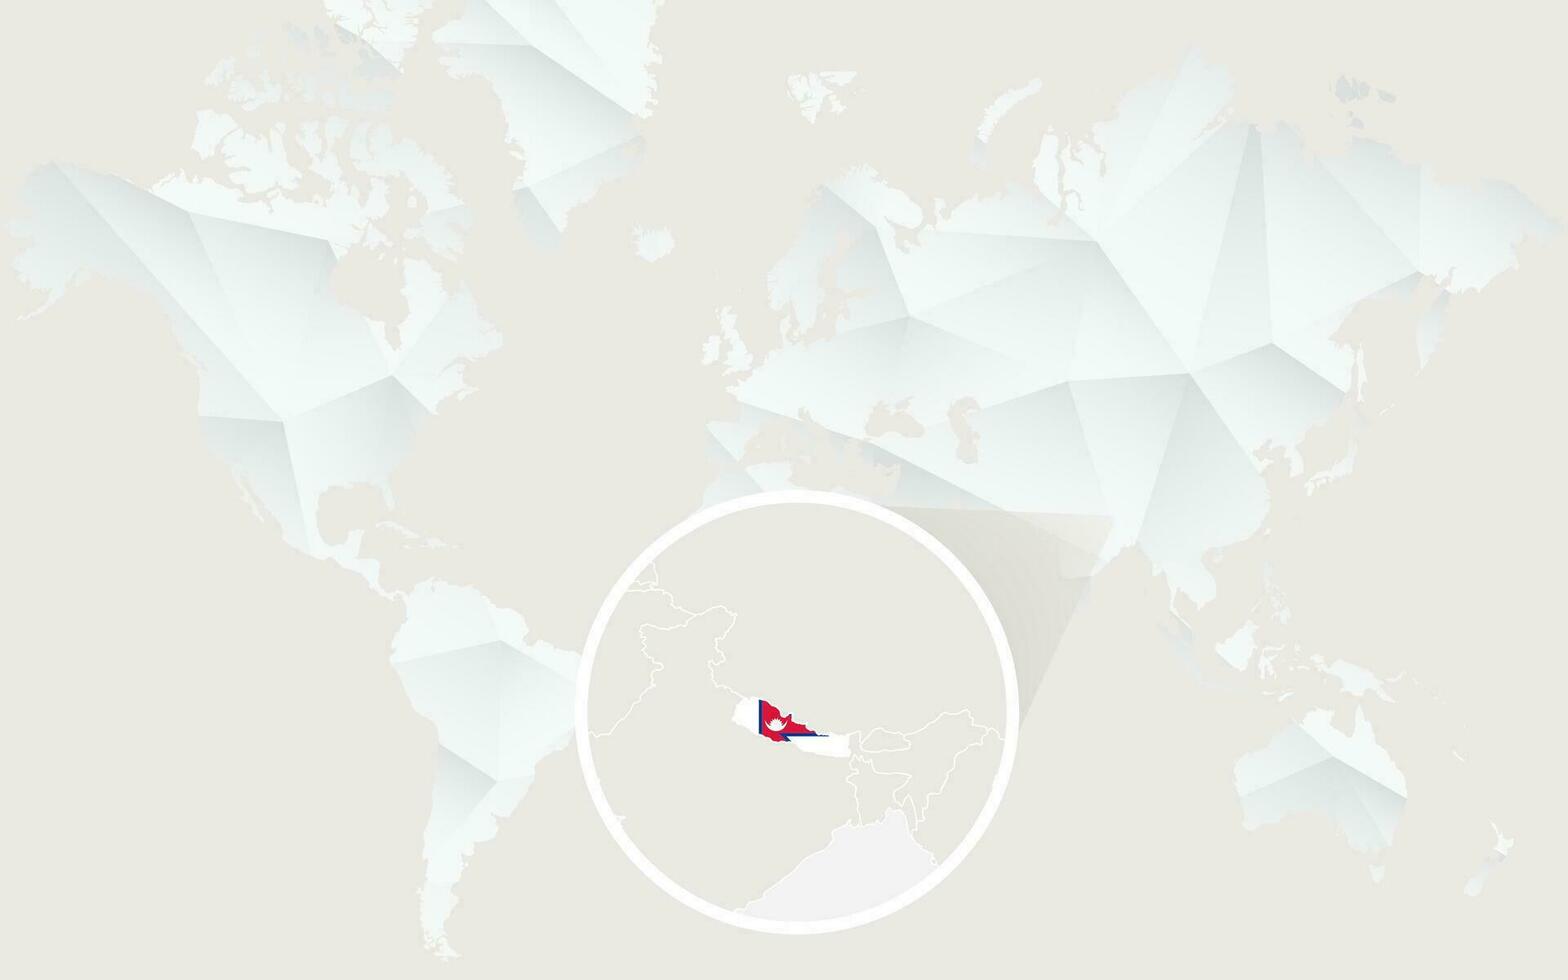 Nepal mapa con bandera en contorno en blanco poligonal mundo mapa. vector